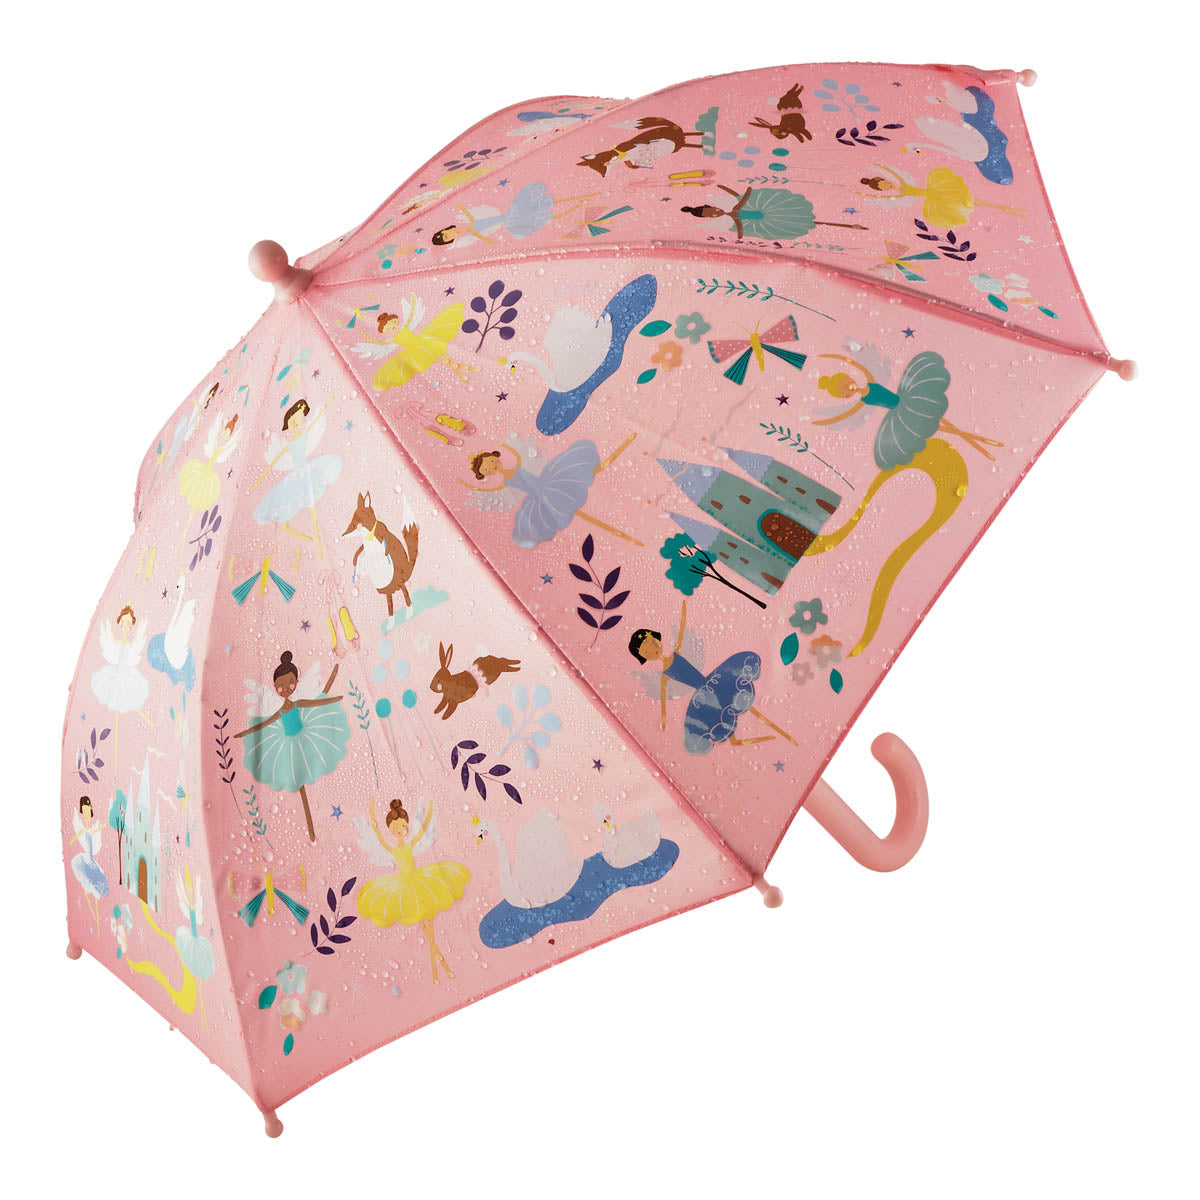 Colour Changing Ballerina Umbrella